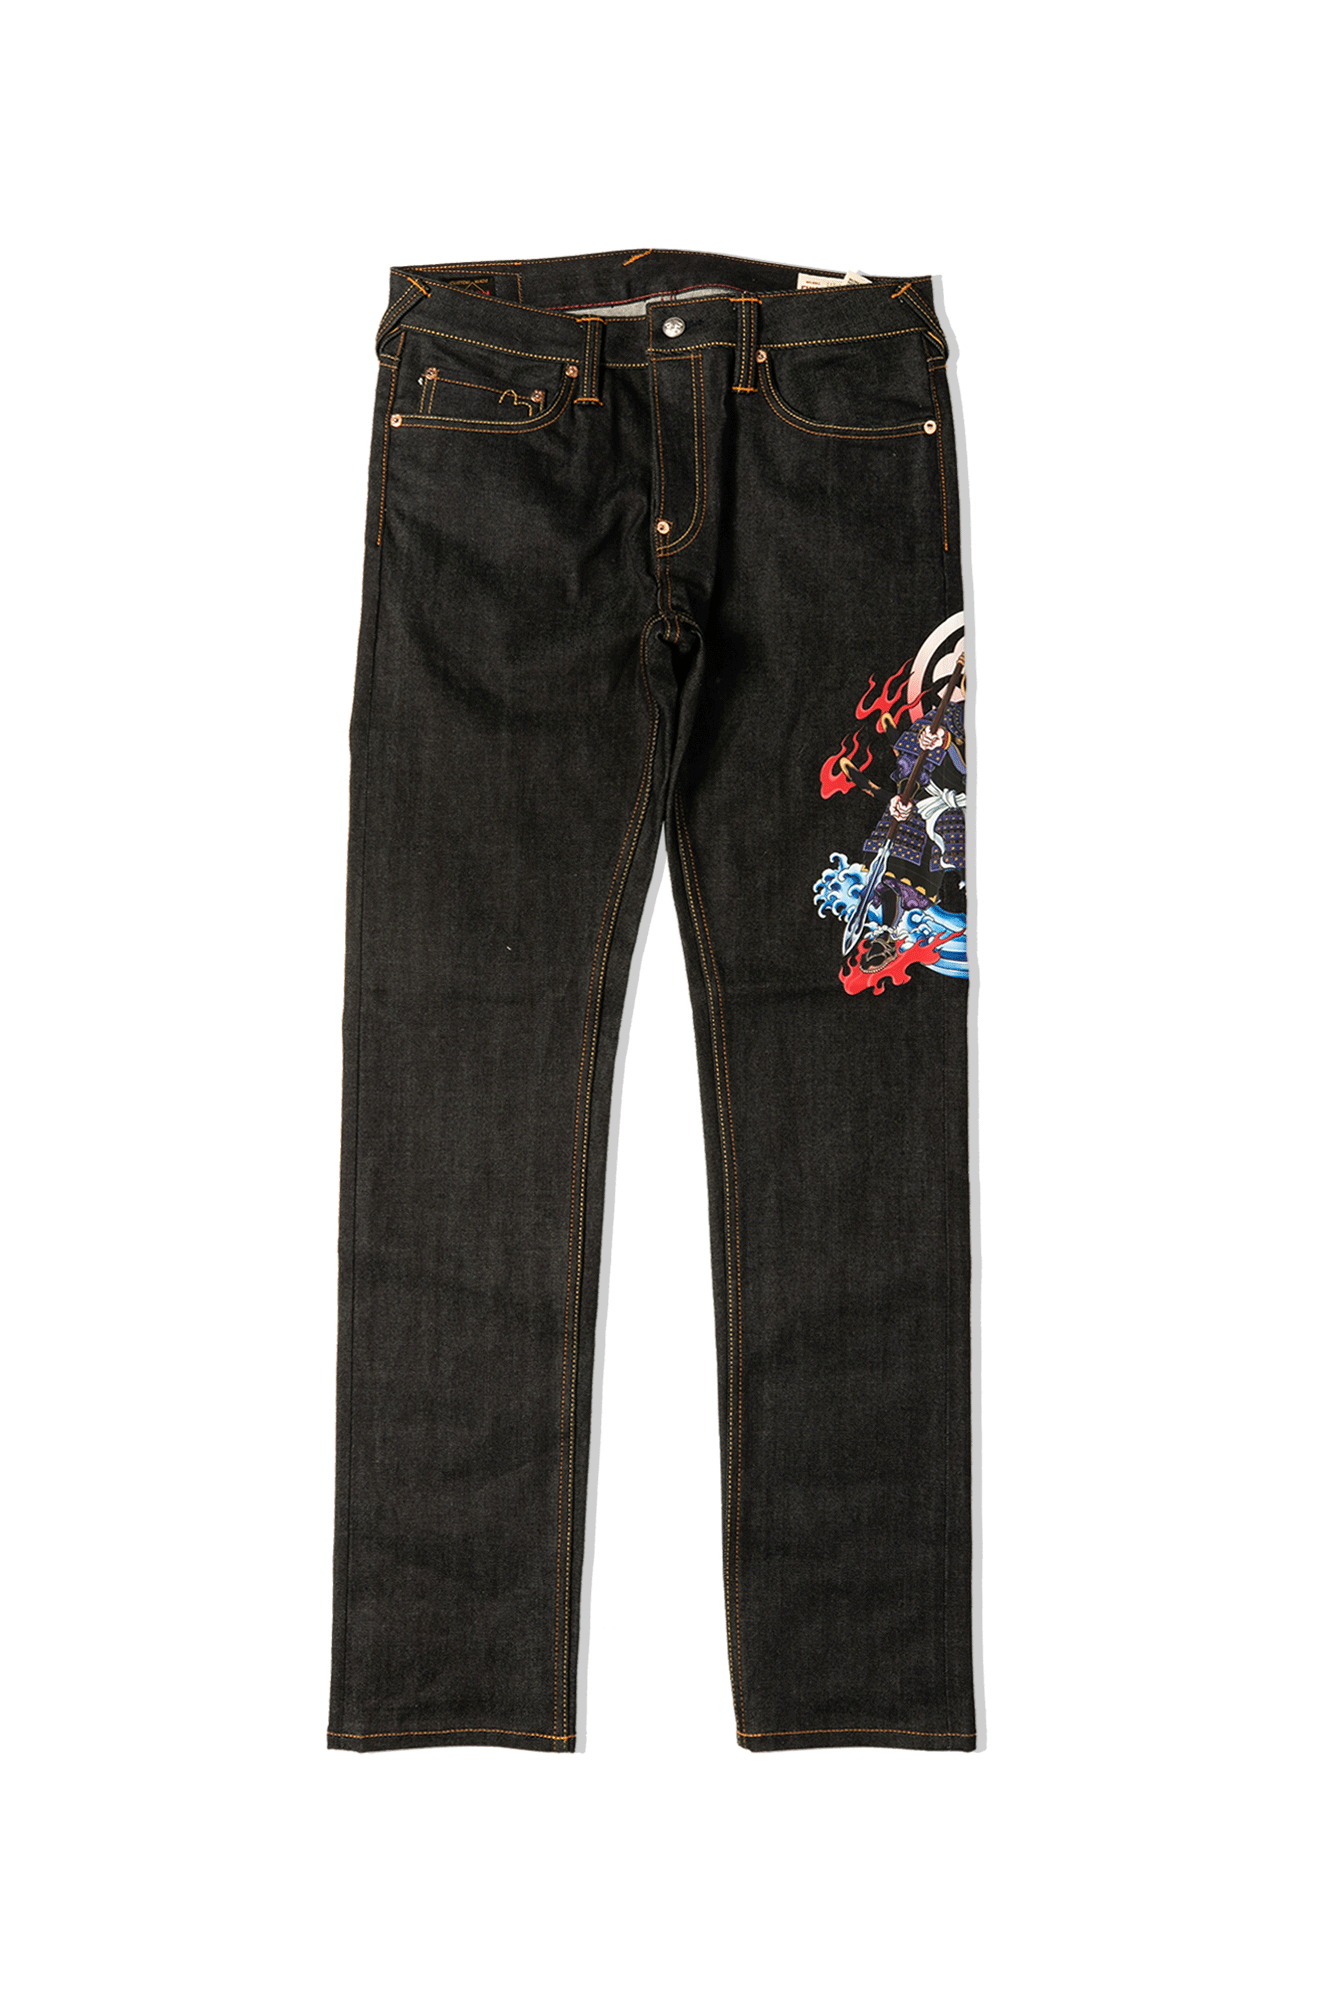 Seagull Kamon & Samurai EMB Jeans